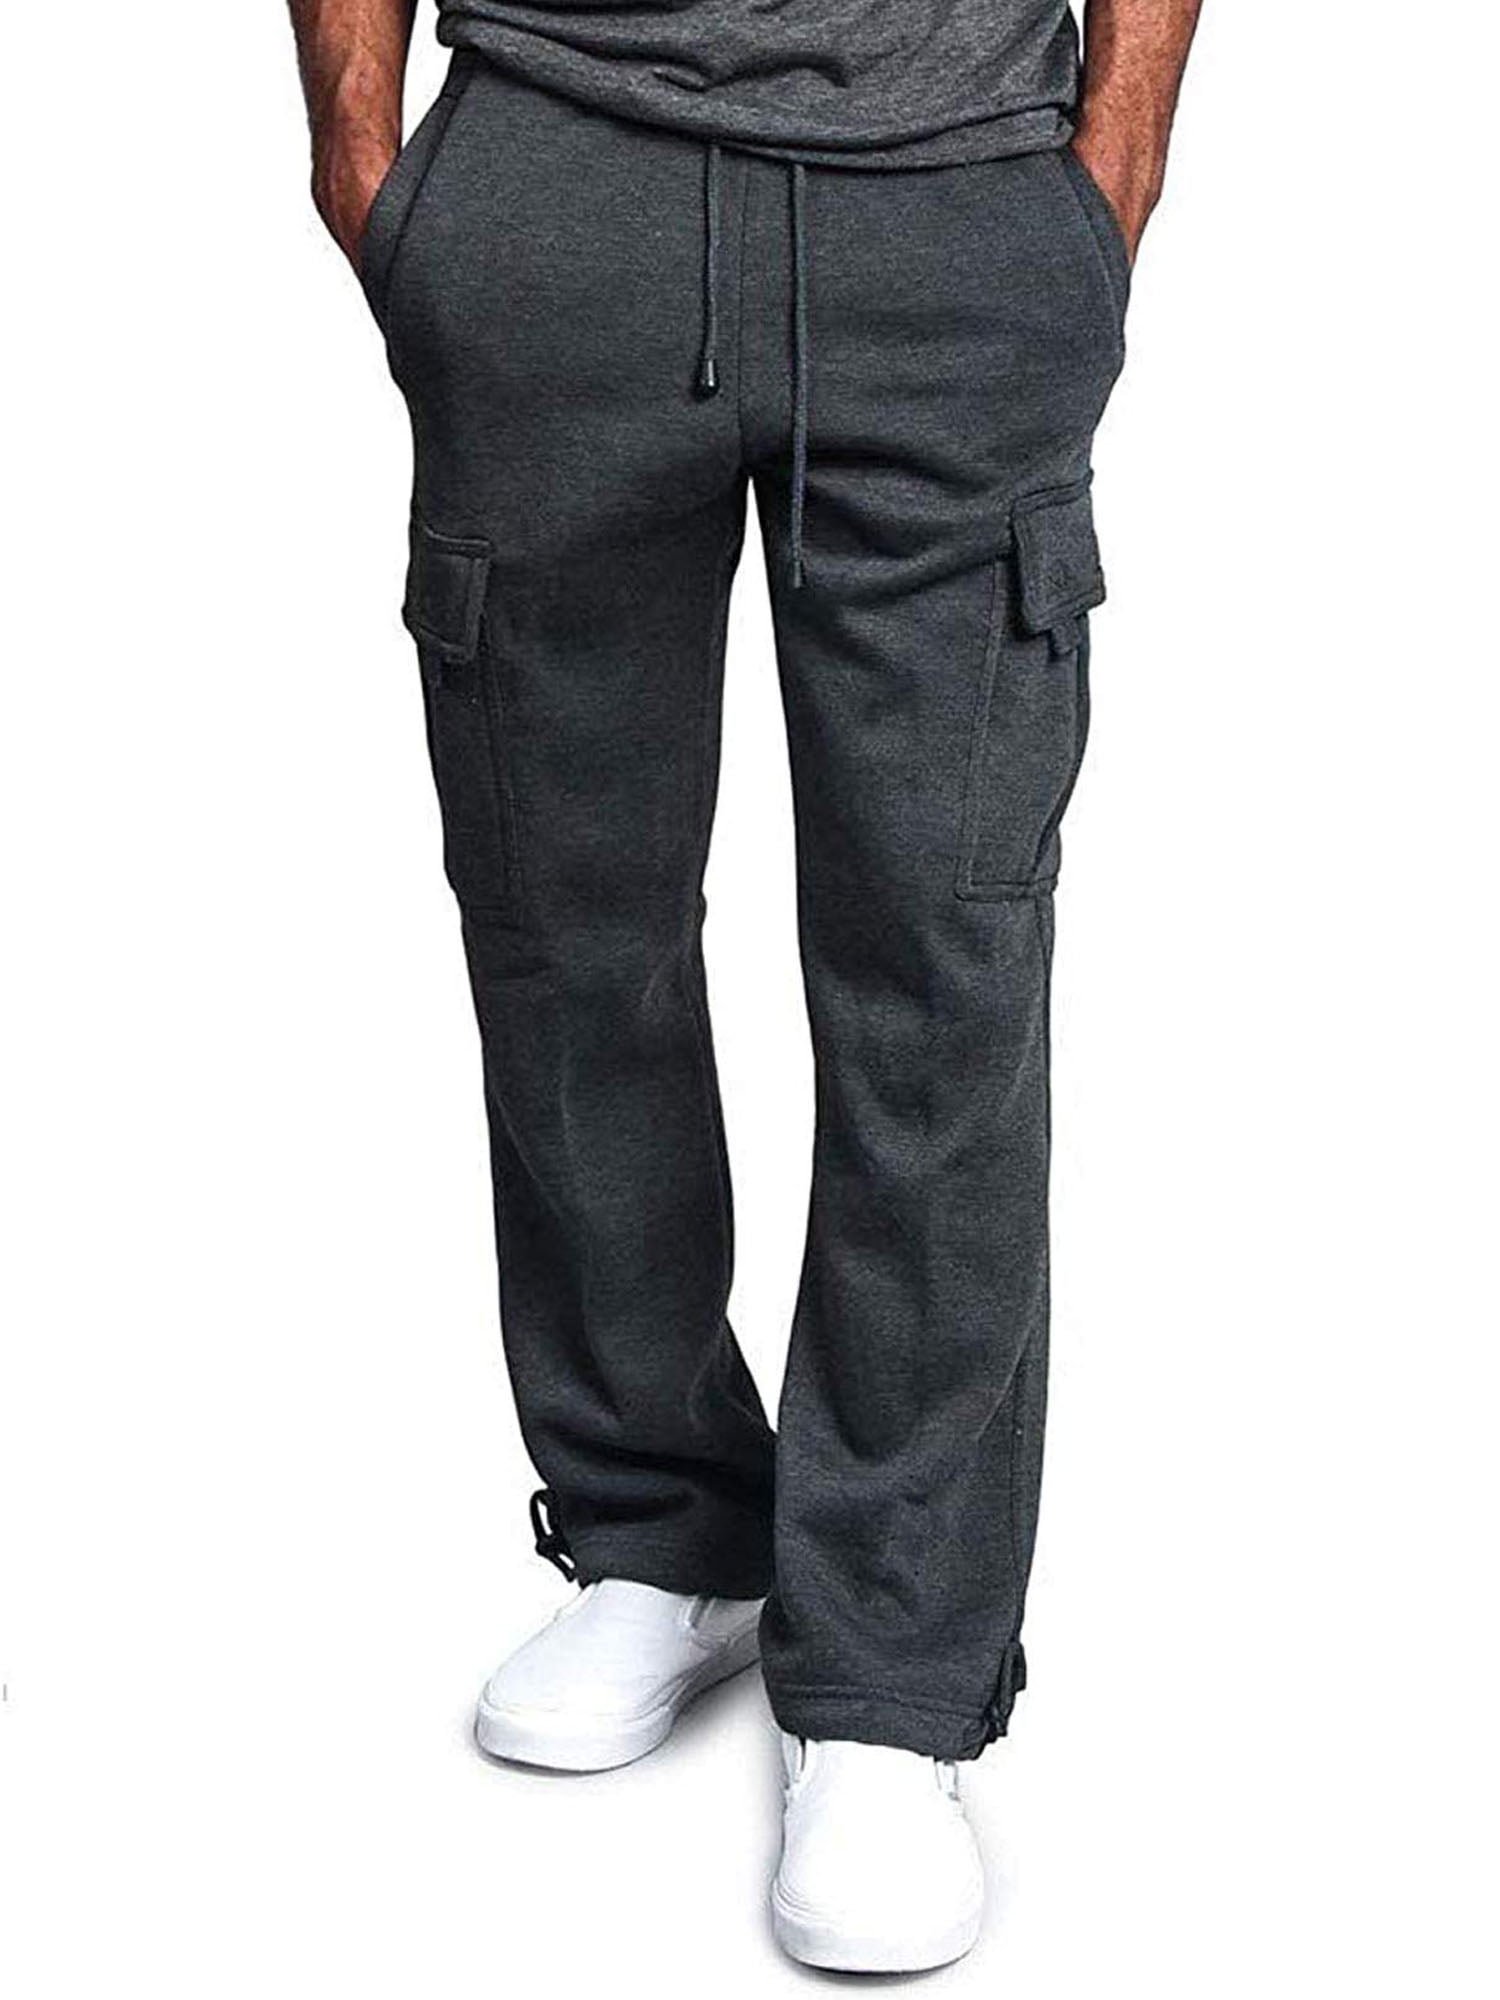 Cargo Sweatpants for Men Plus Size Baggy Tactical Workout Trouser ...